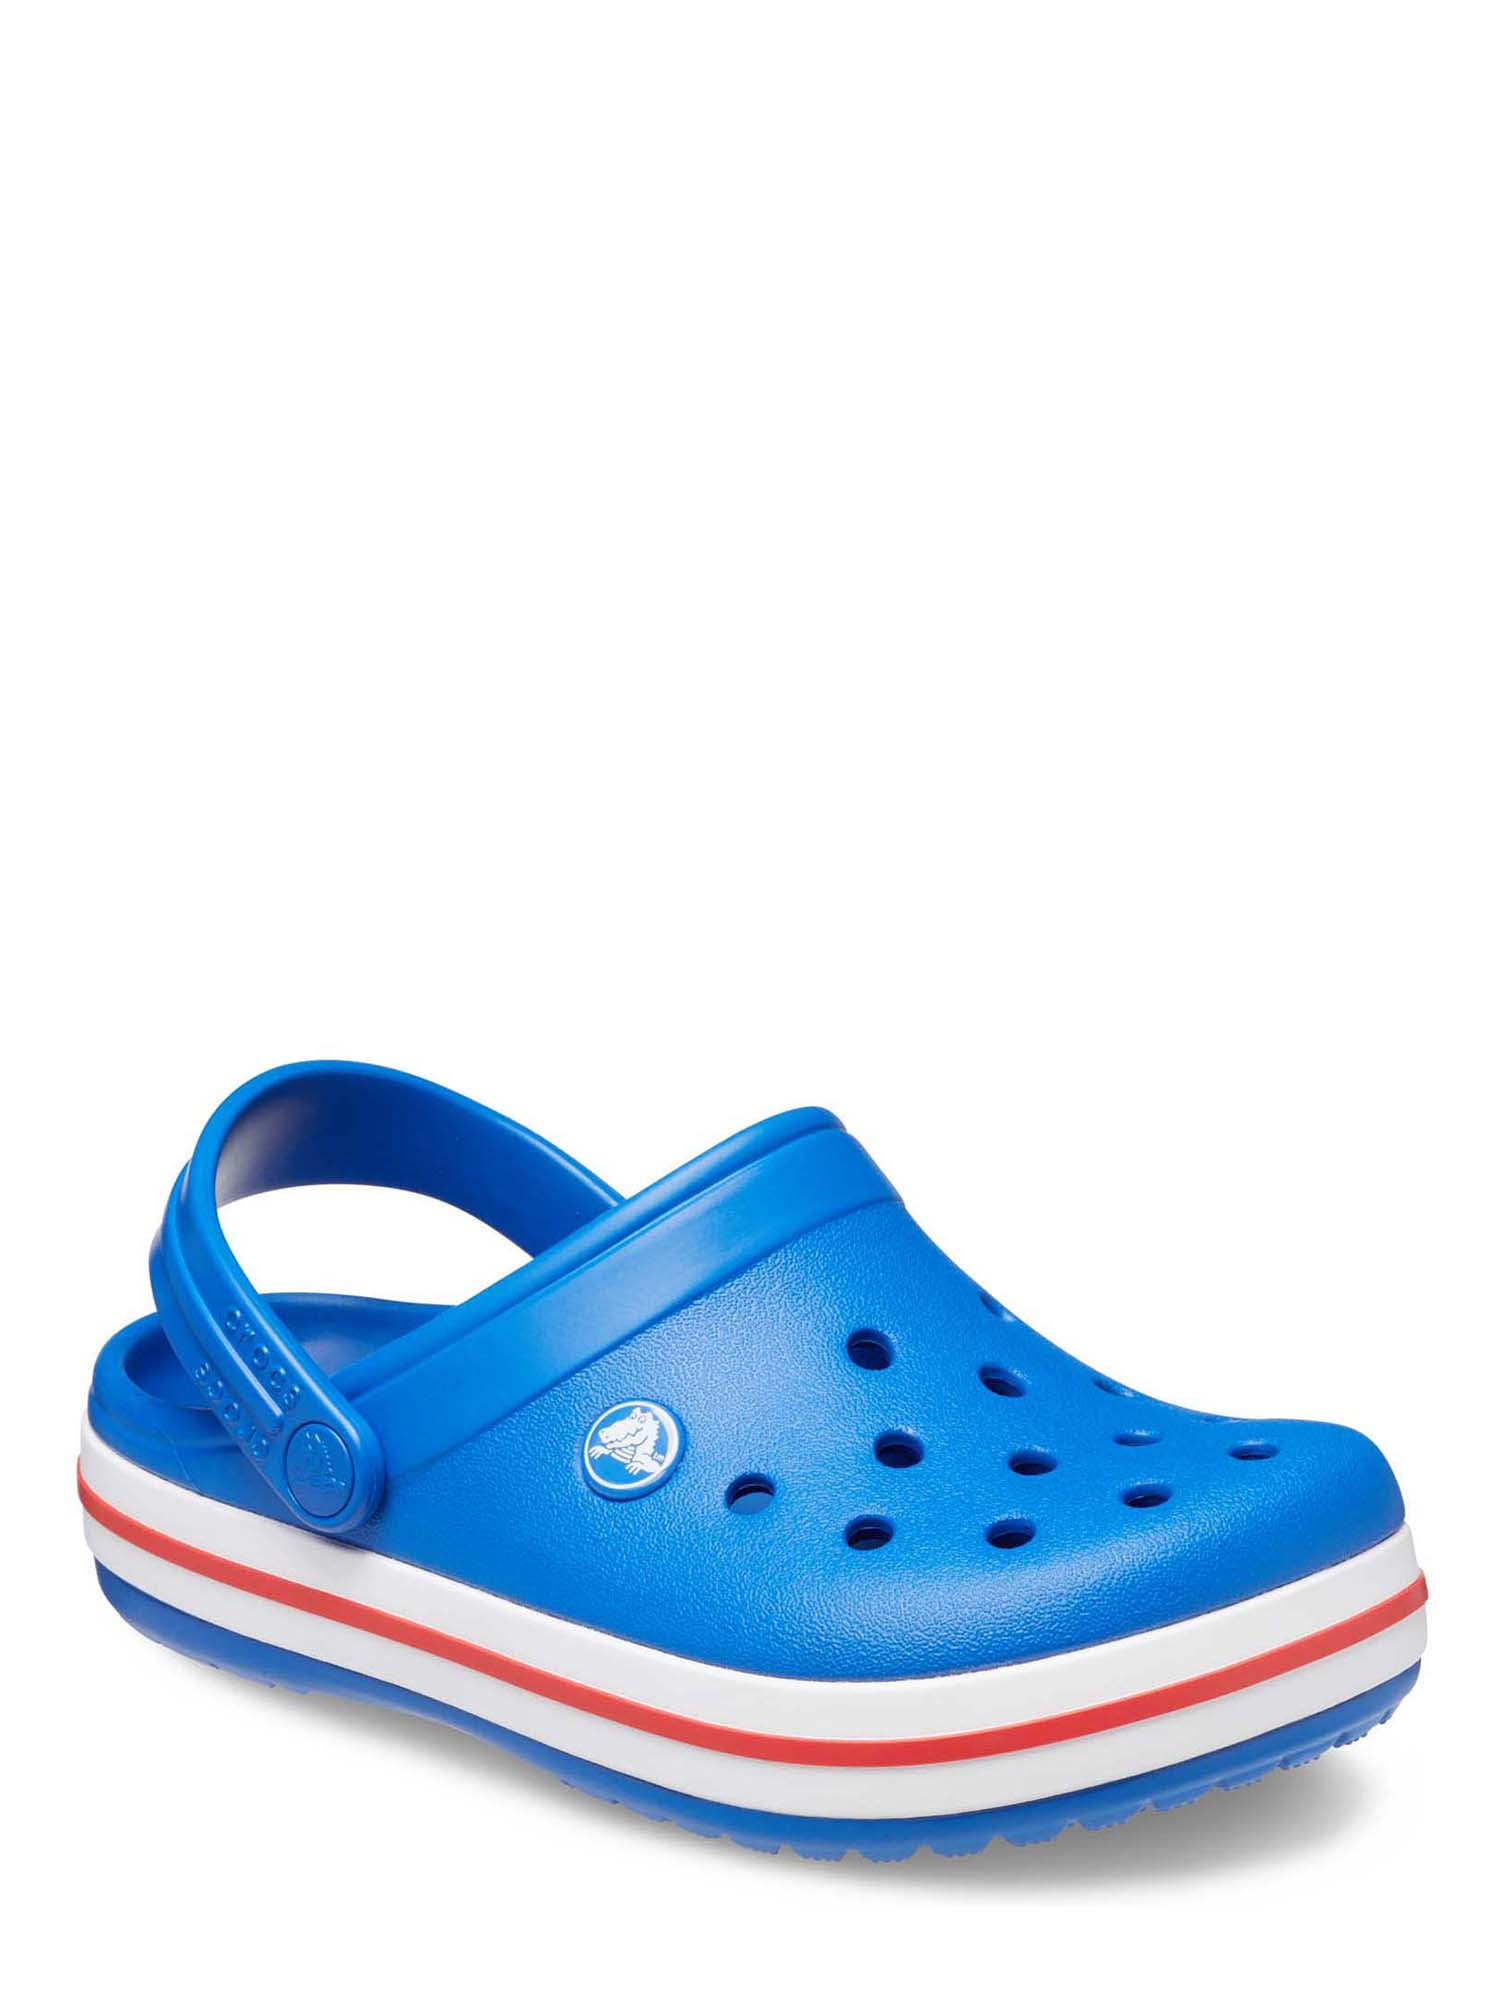 Crocs Toddler & Kids Crocband Clog Sandal, Sizes 4-6 